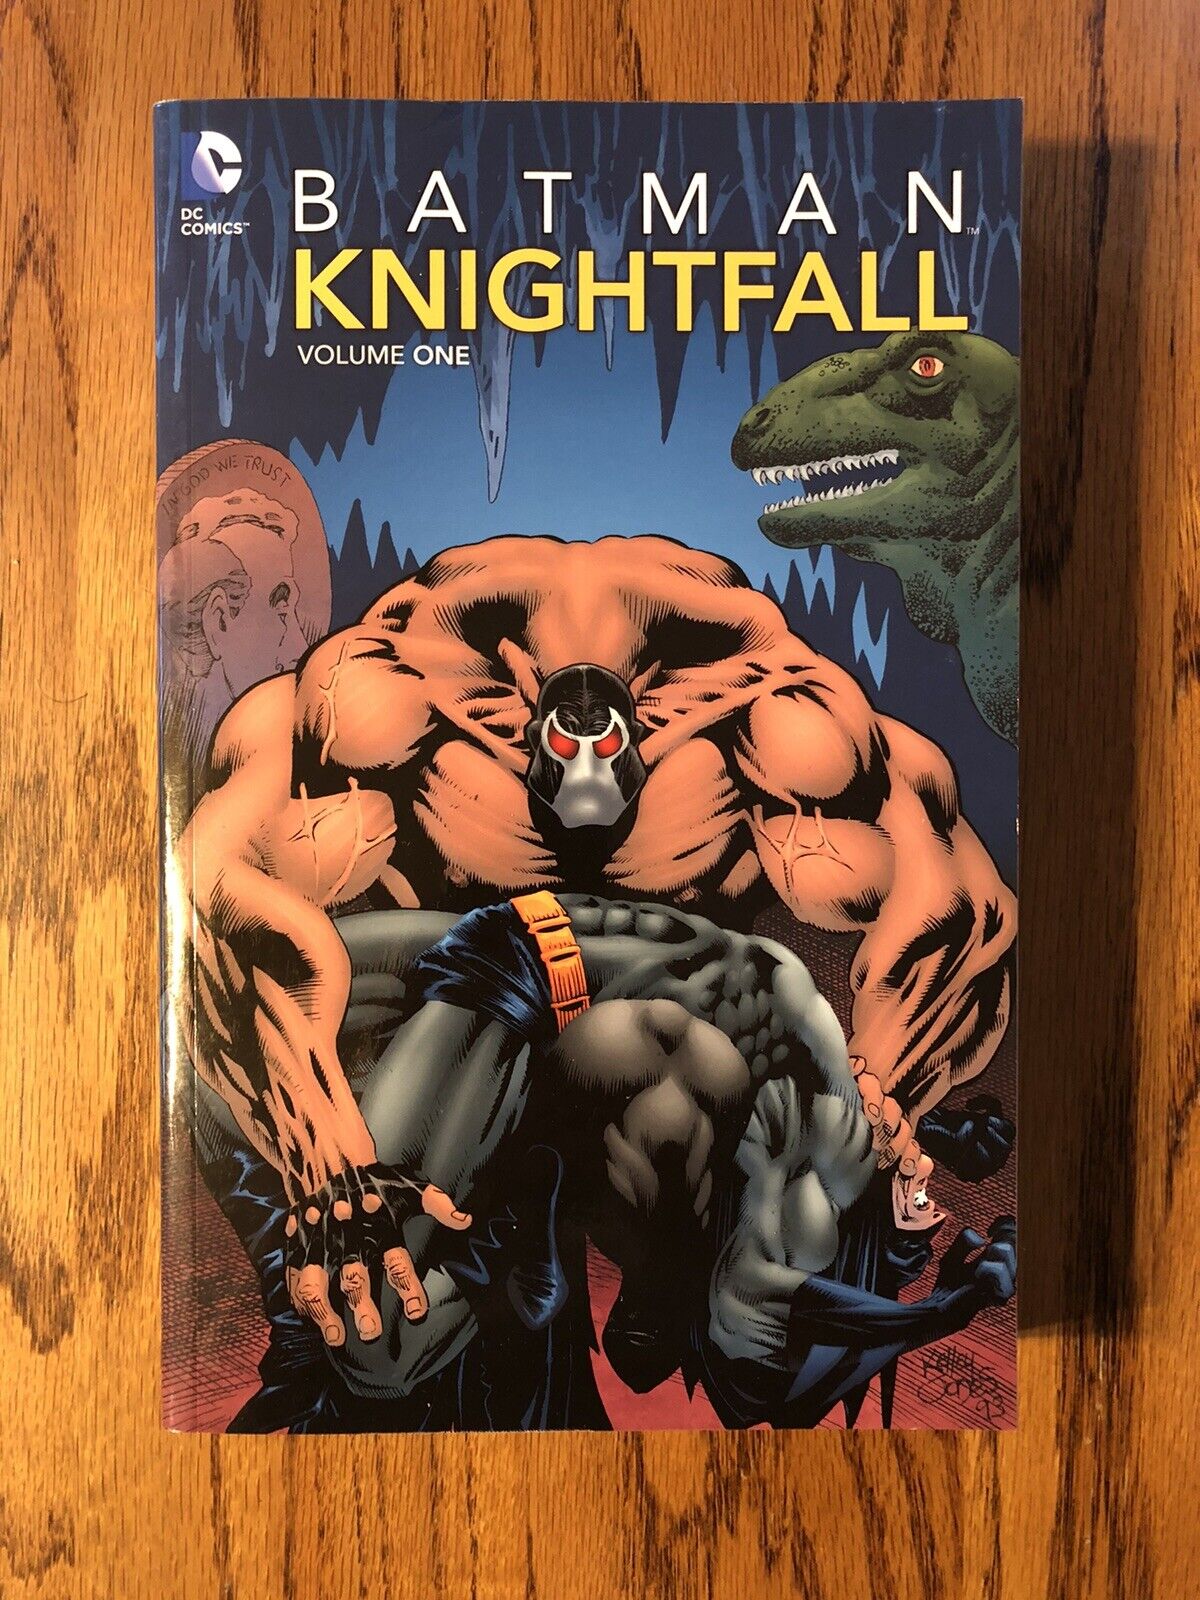 Batman: Knightfall Vol. 1 by D. C. Comics (2012, Trade Paperback)